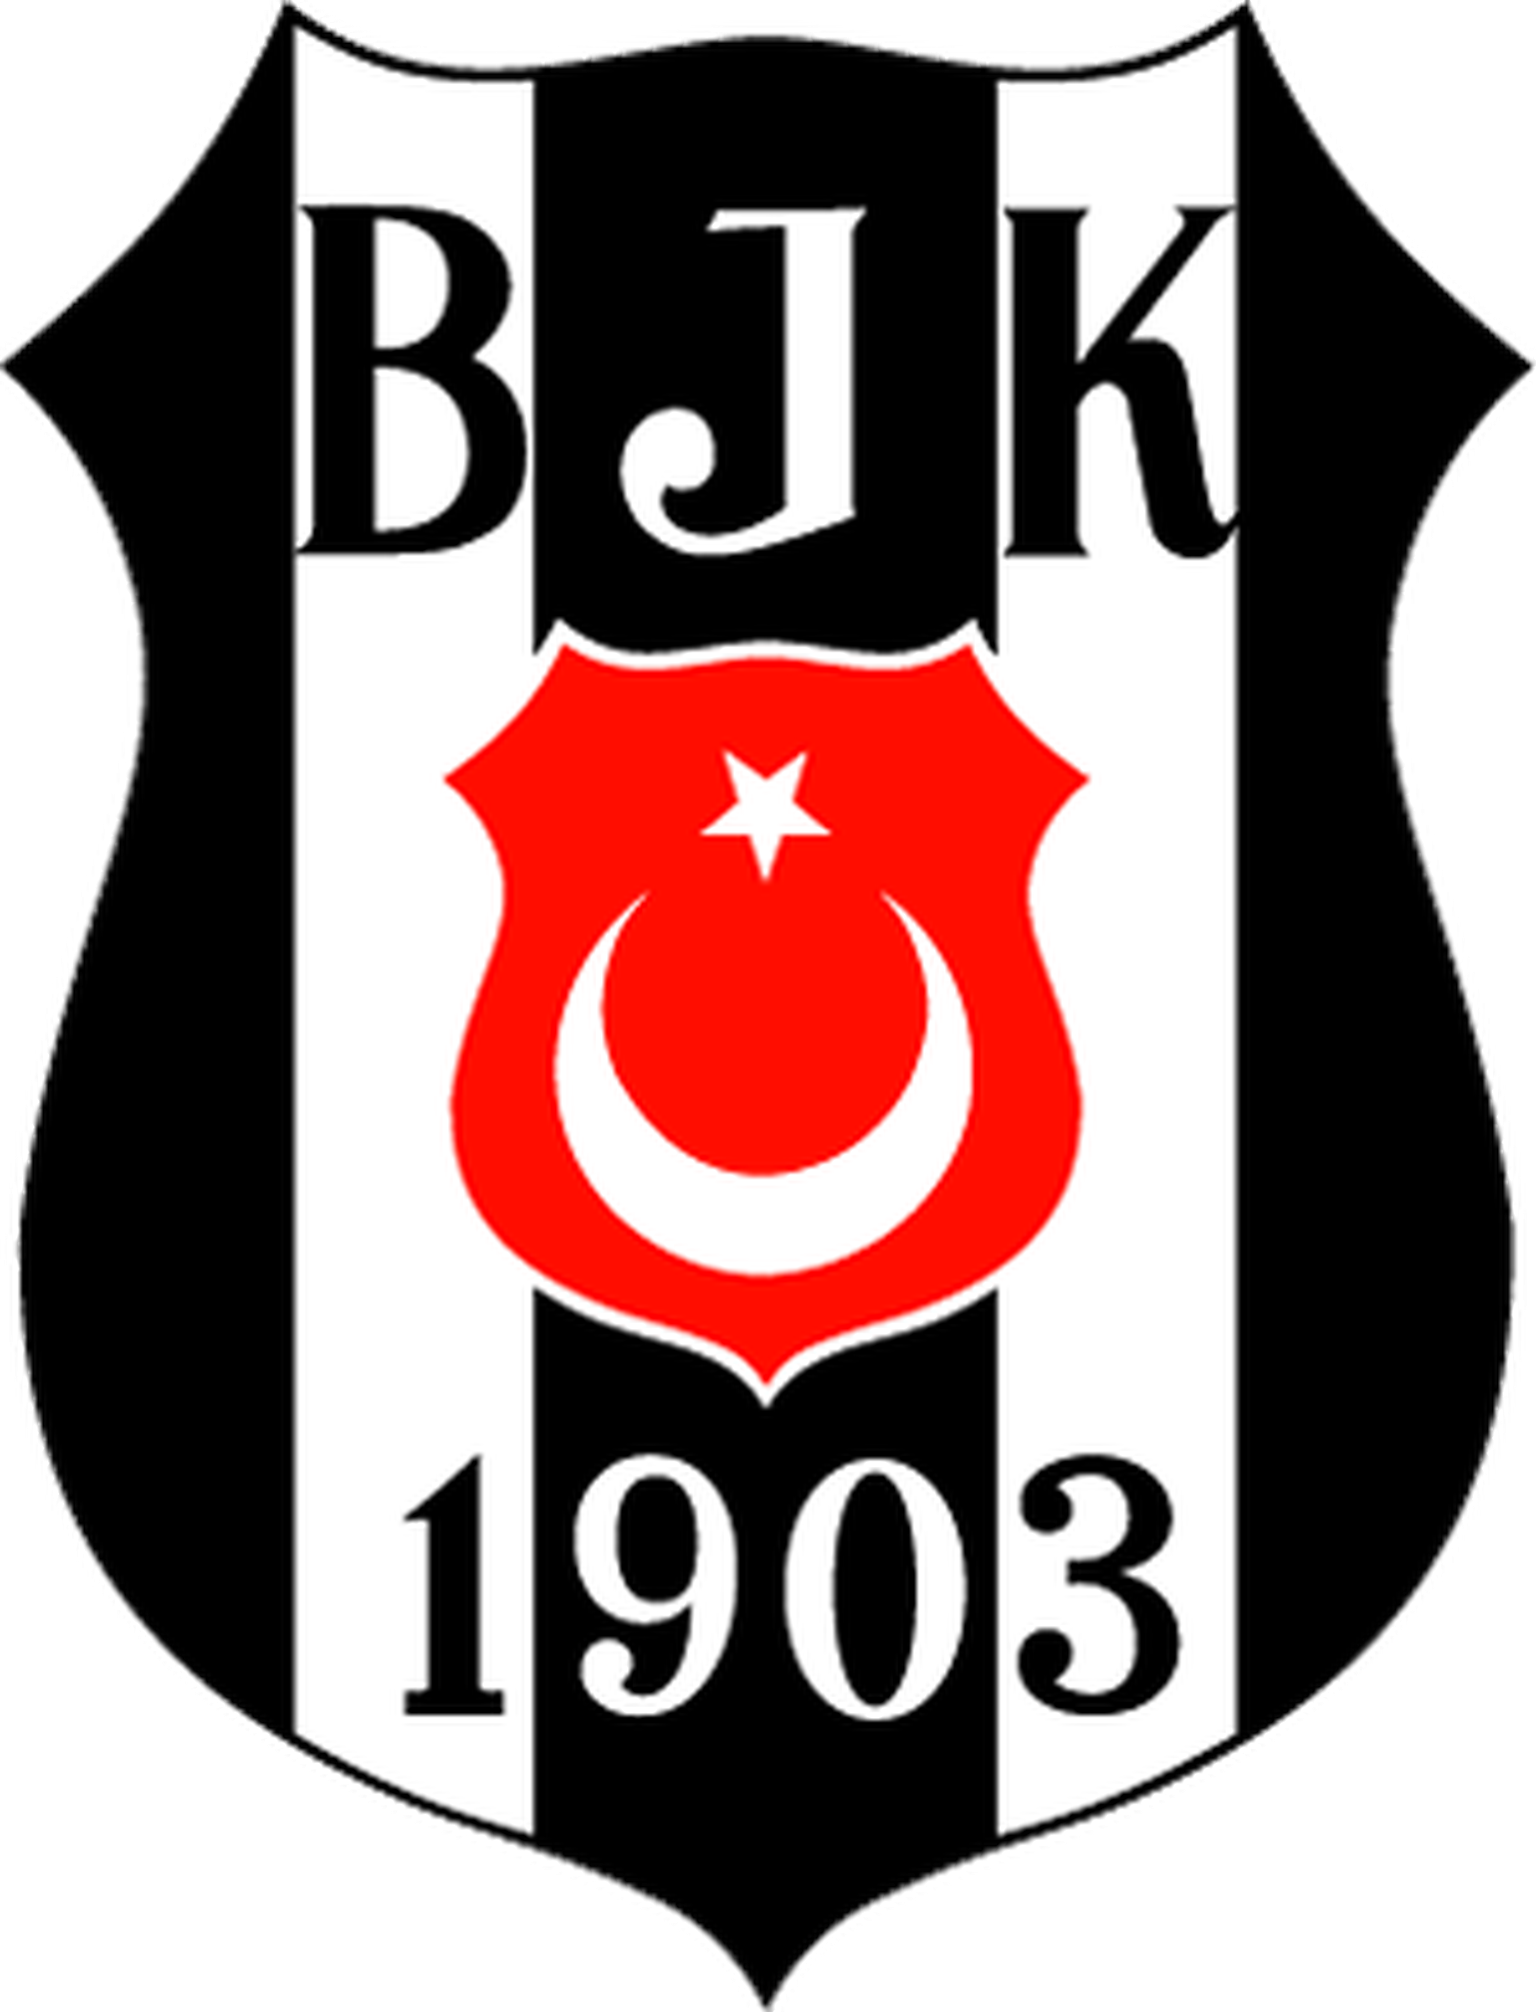 Istanbuli Besiktasi logo.